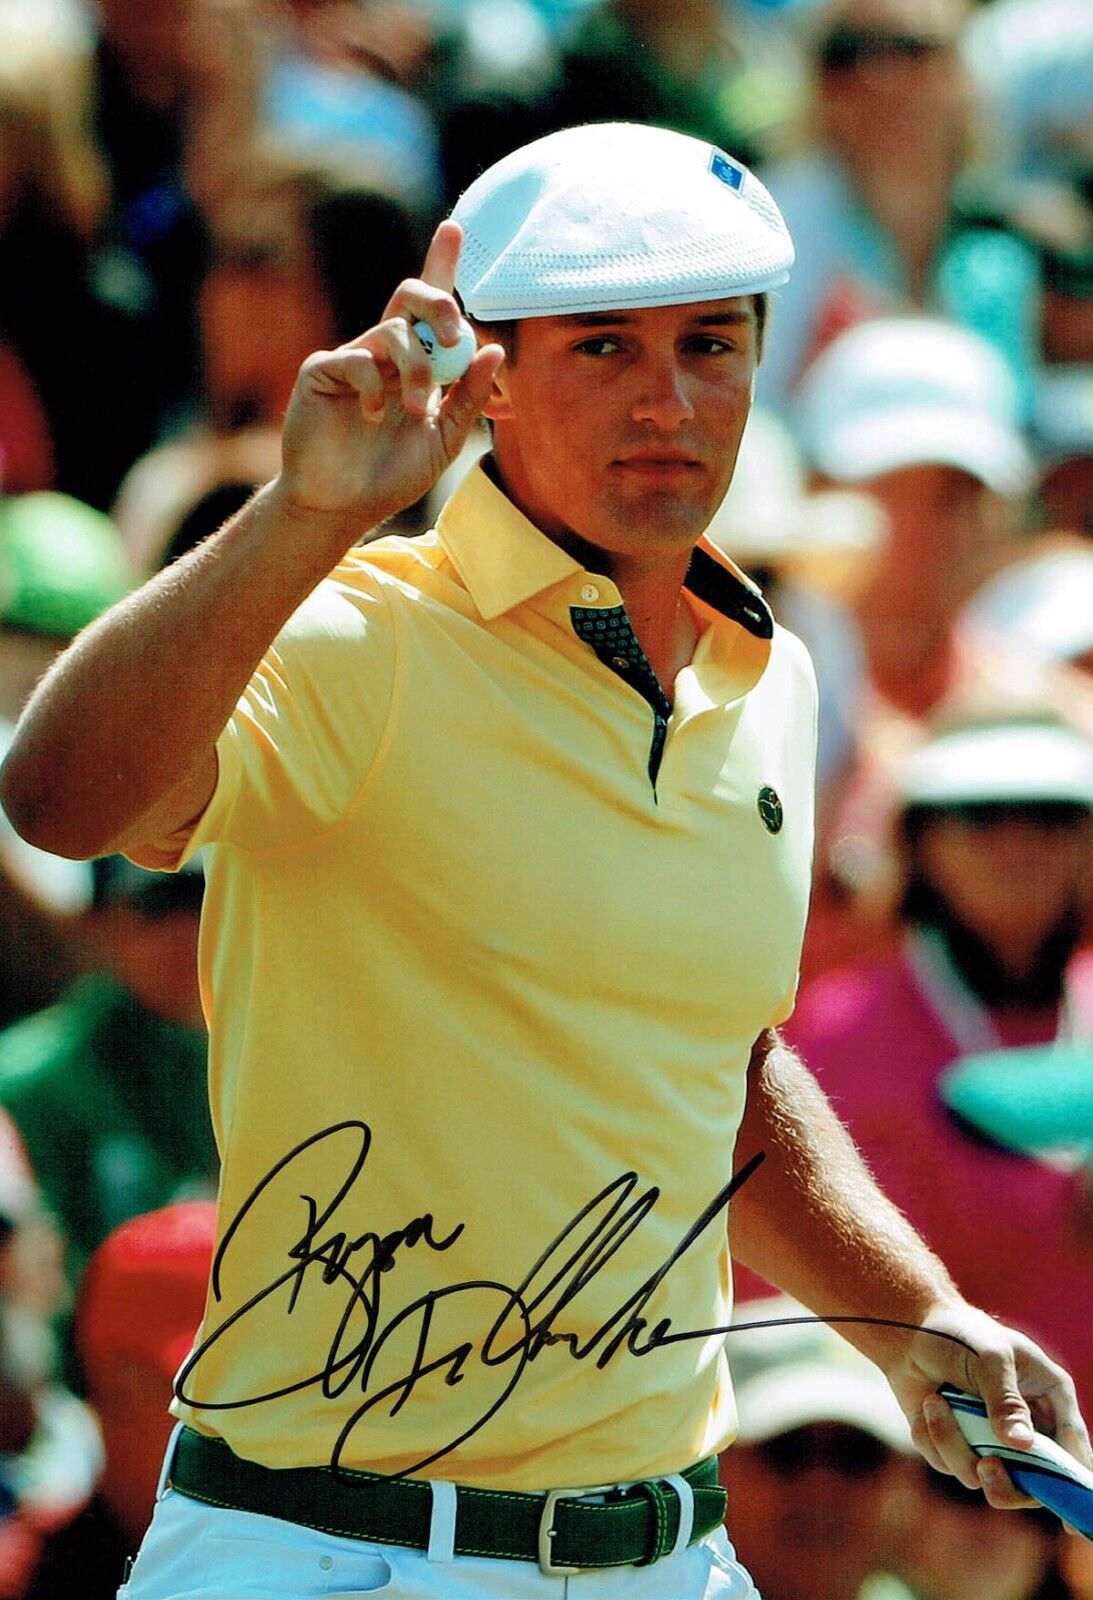 Bryson DeCHAMBEAU 2017 SIGNED Autograph 12x8 Photo Poster painting 2 AFTAL COA Golf USA Golfer